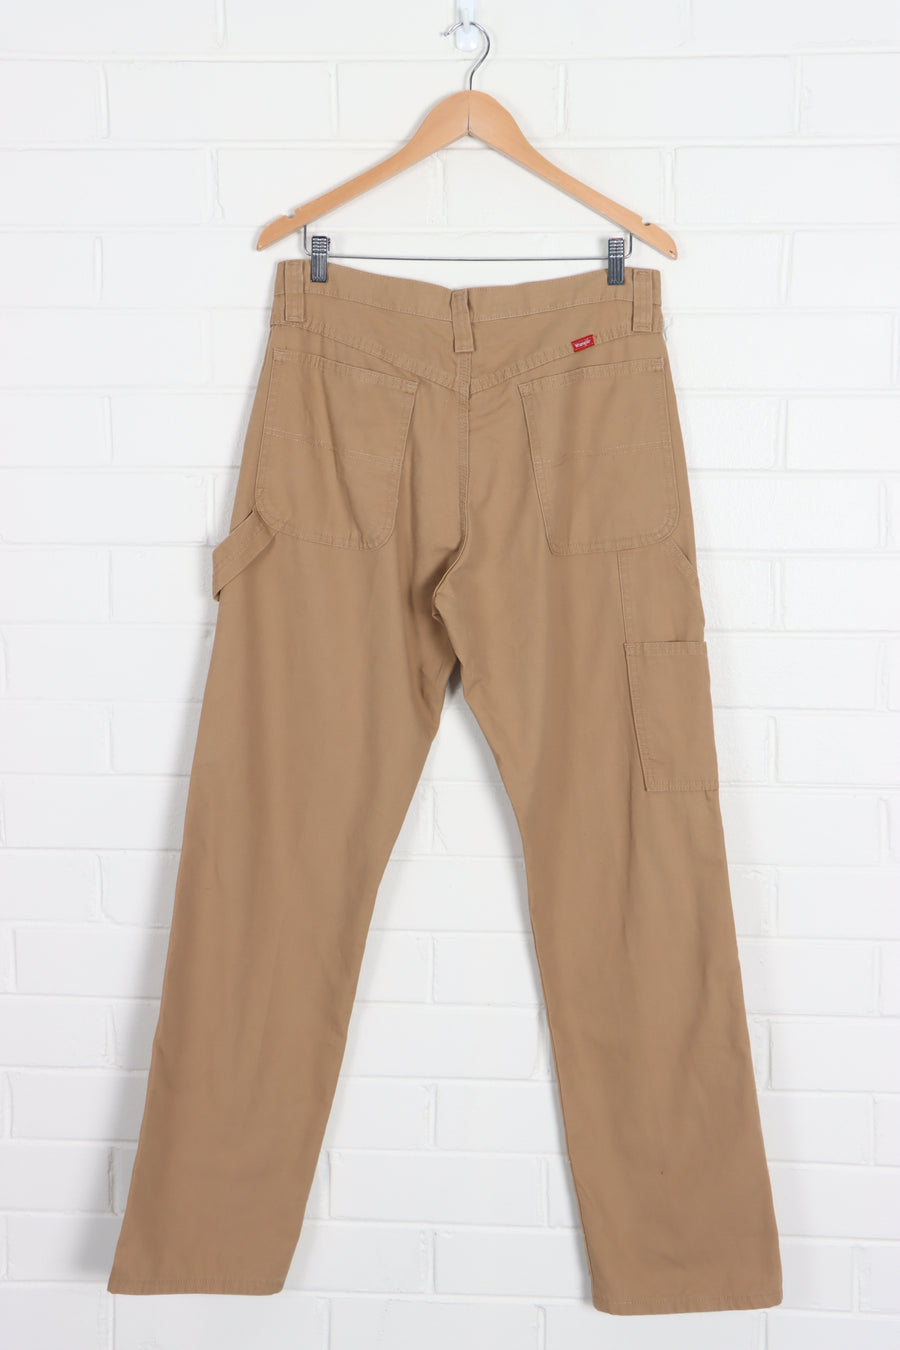 WRANGLER Tan Workwear Carpenter Pants (32 x 34) - Vintage Sole Melbourne